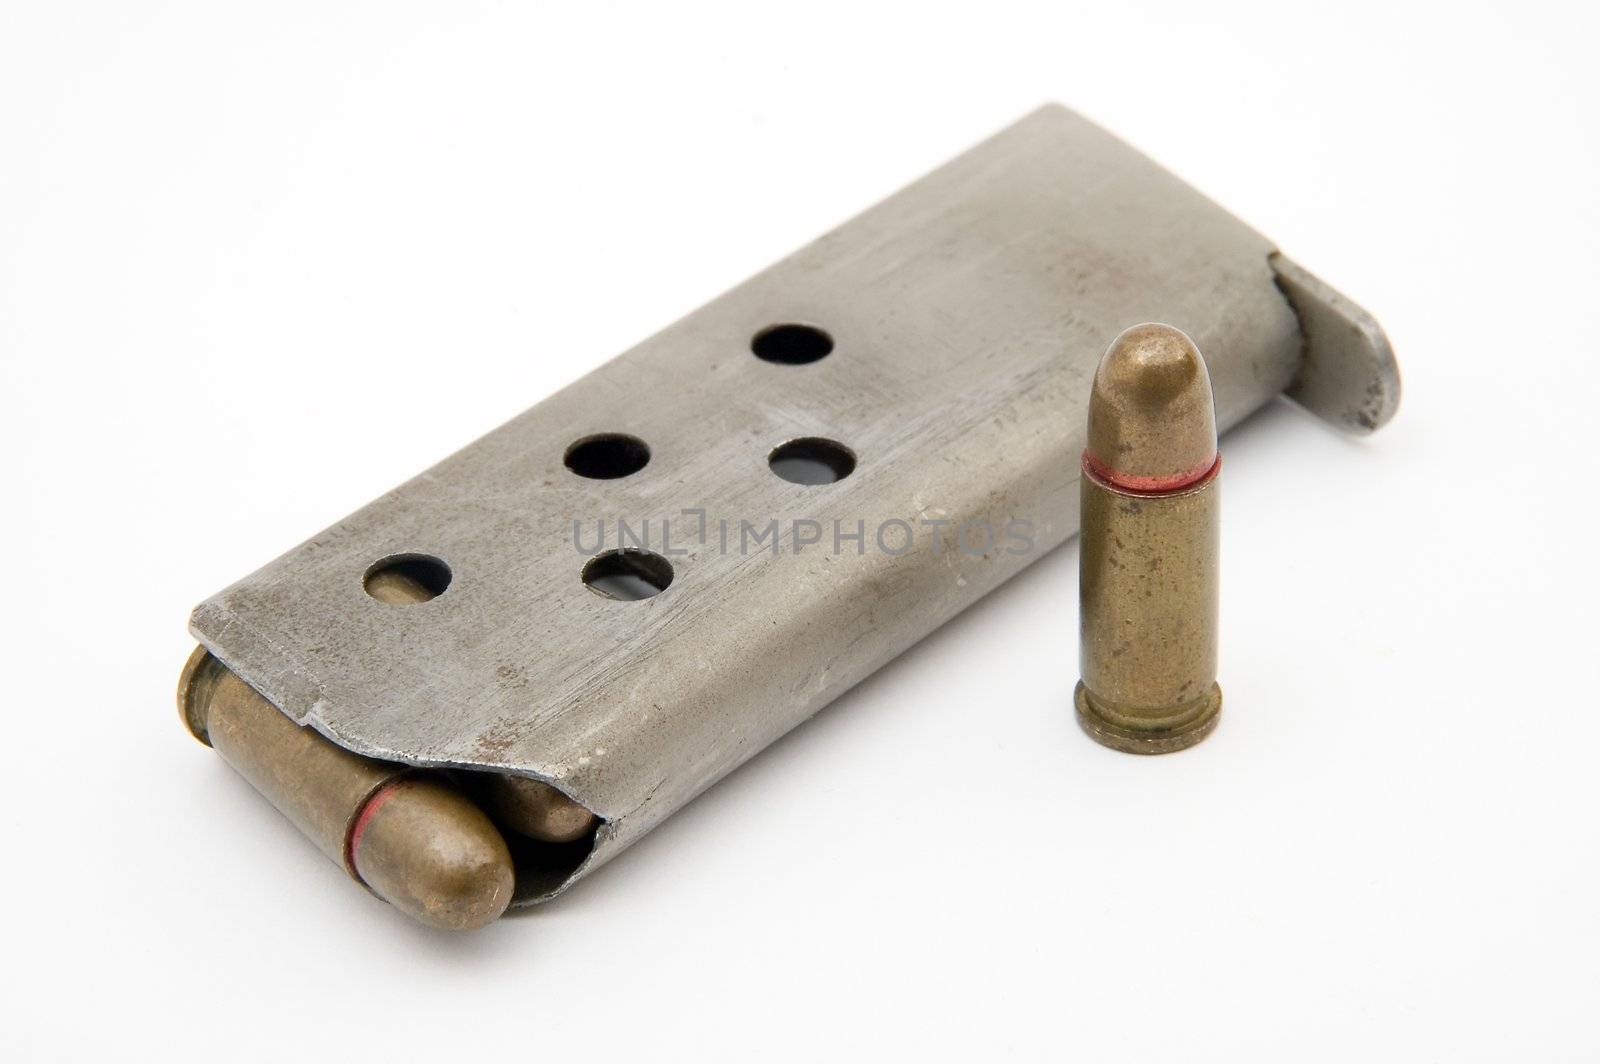 ammunition magazine and a single bullet isolated on white background